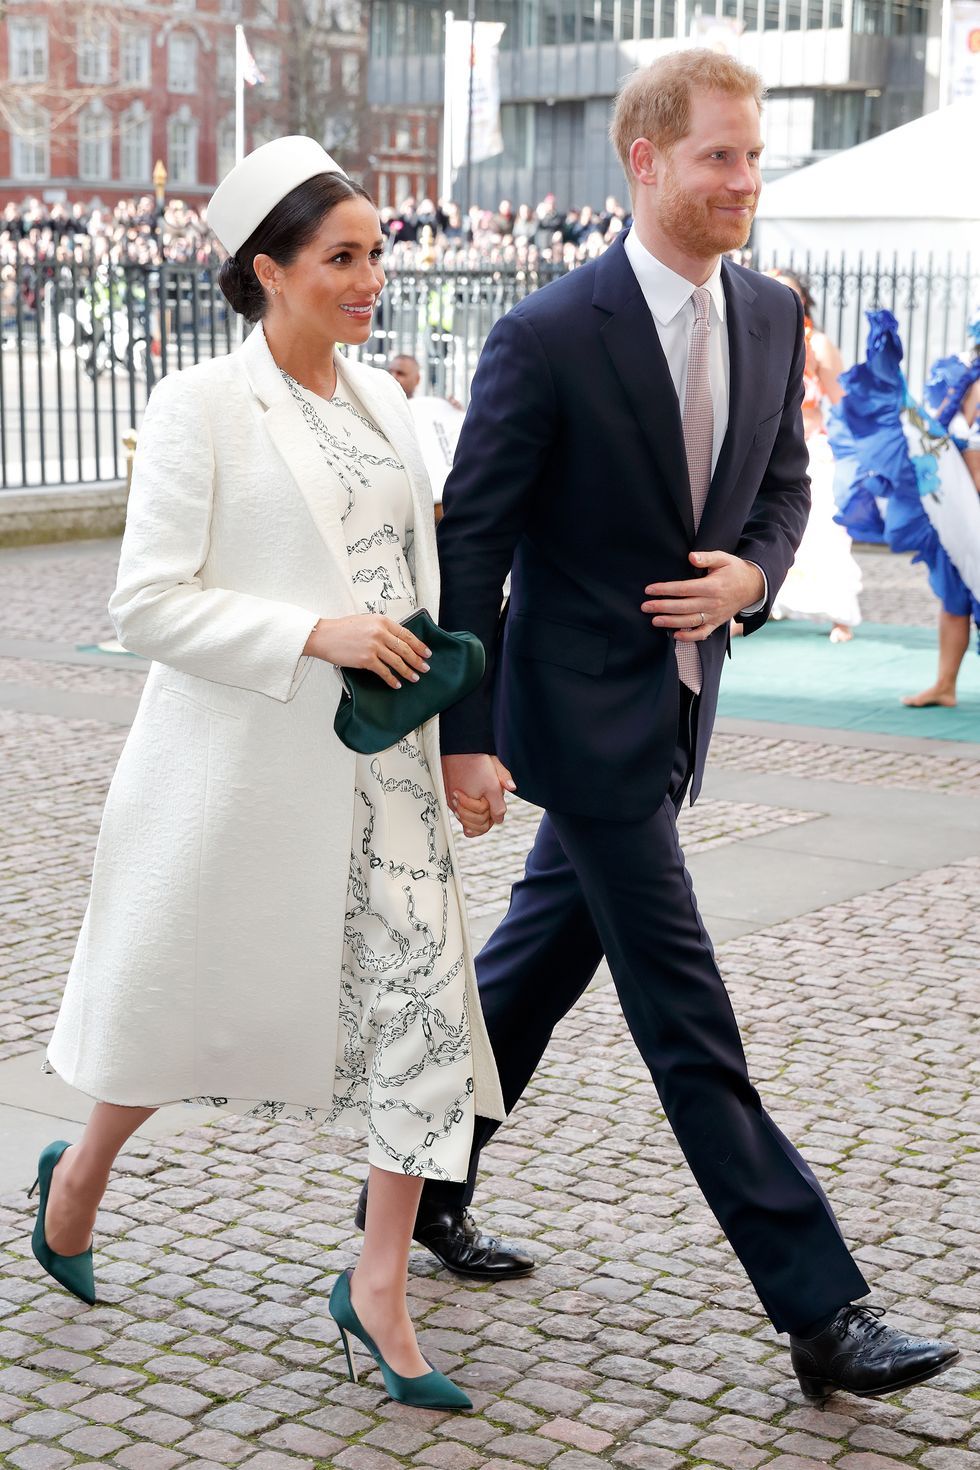 harry meghan foto 1 aprile 2020 kate middleton william royal family harry meghan style vestiti harry meghan markle dress vestiti style harry meghan